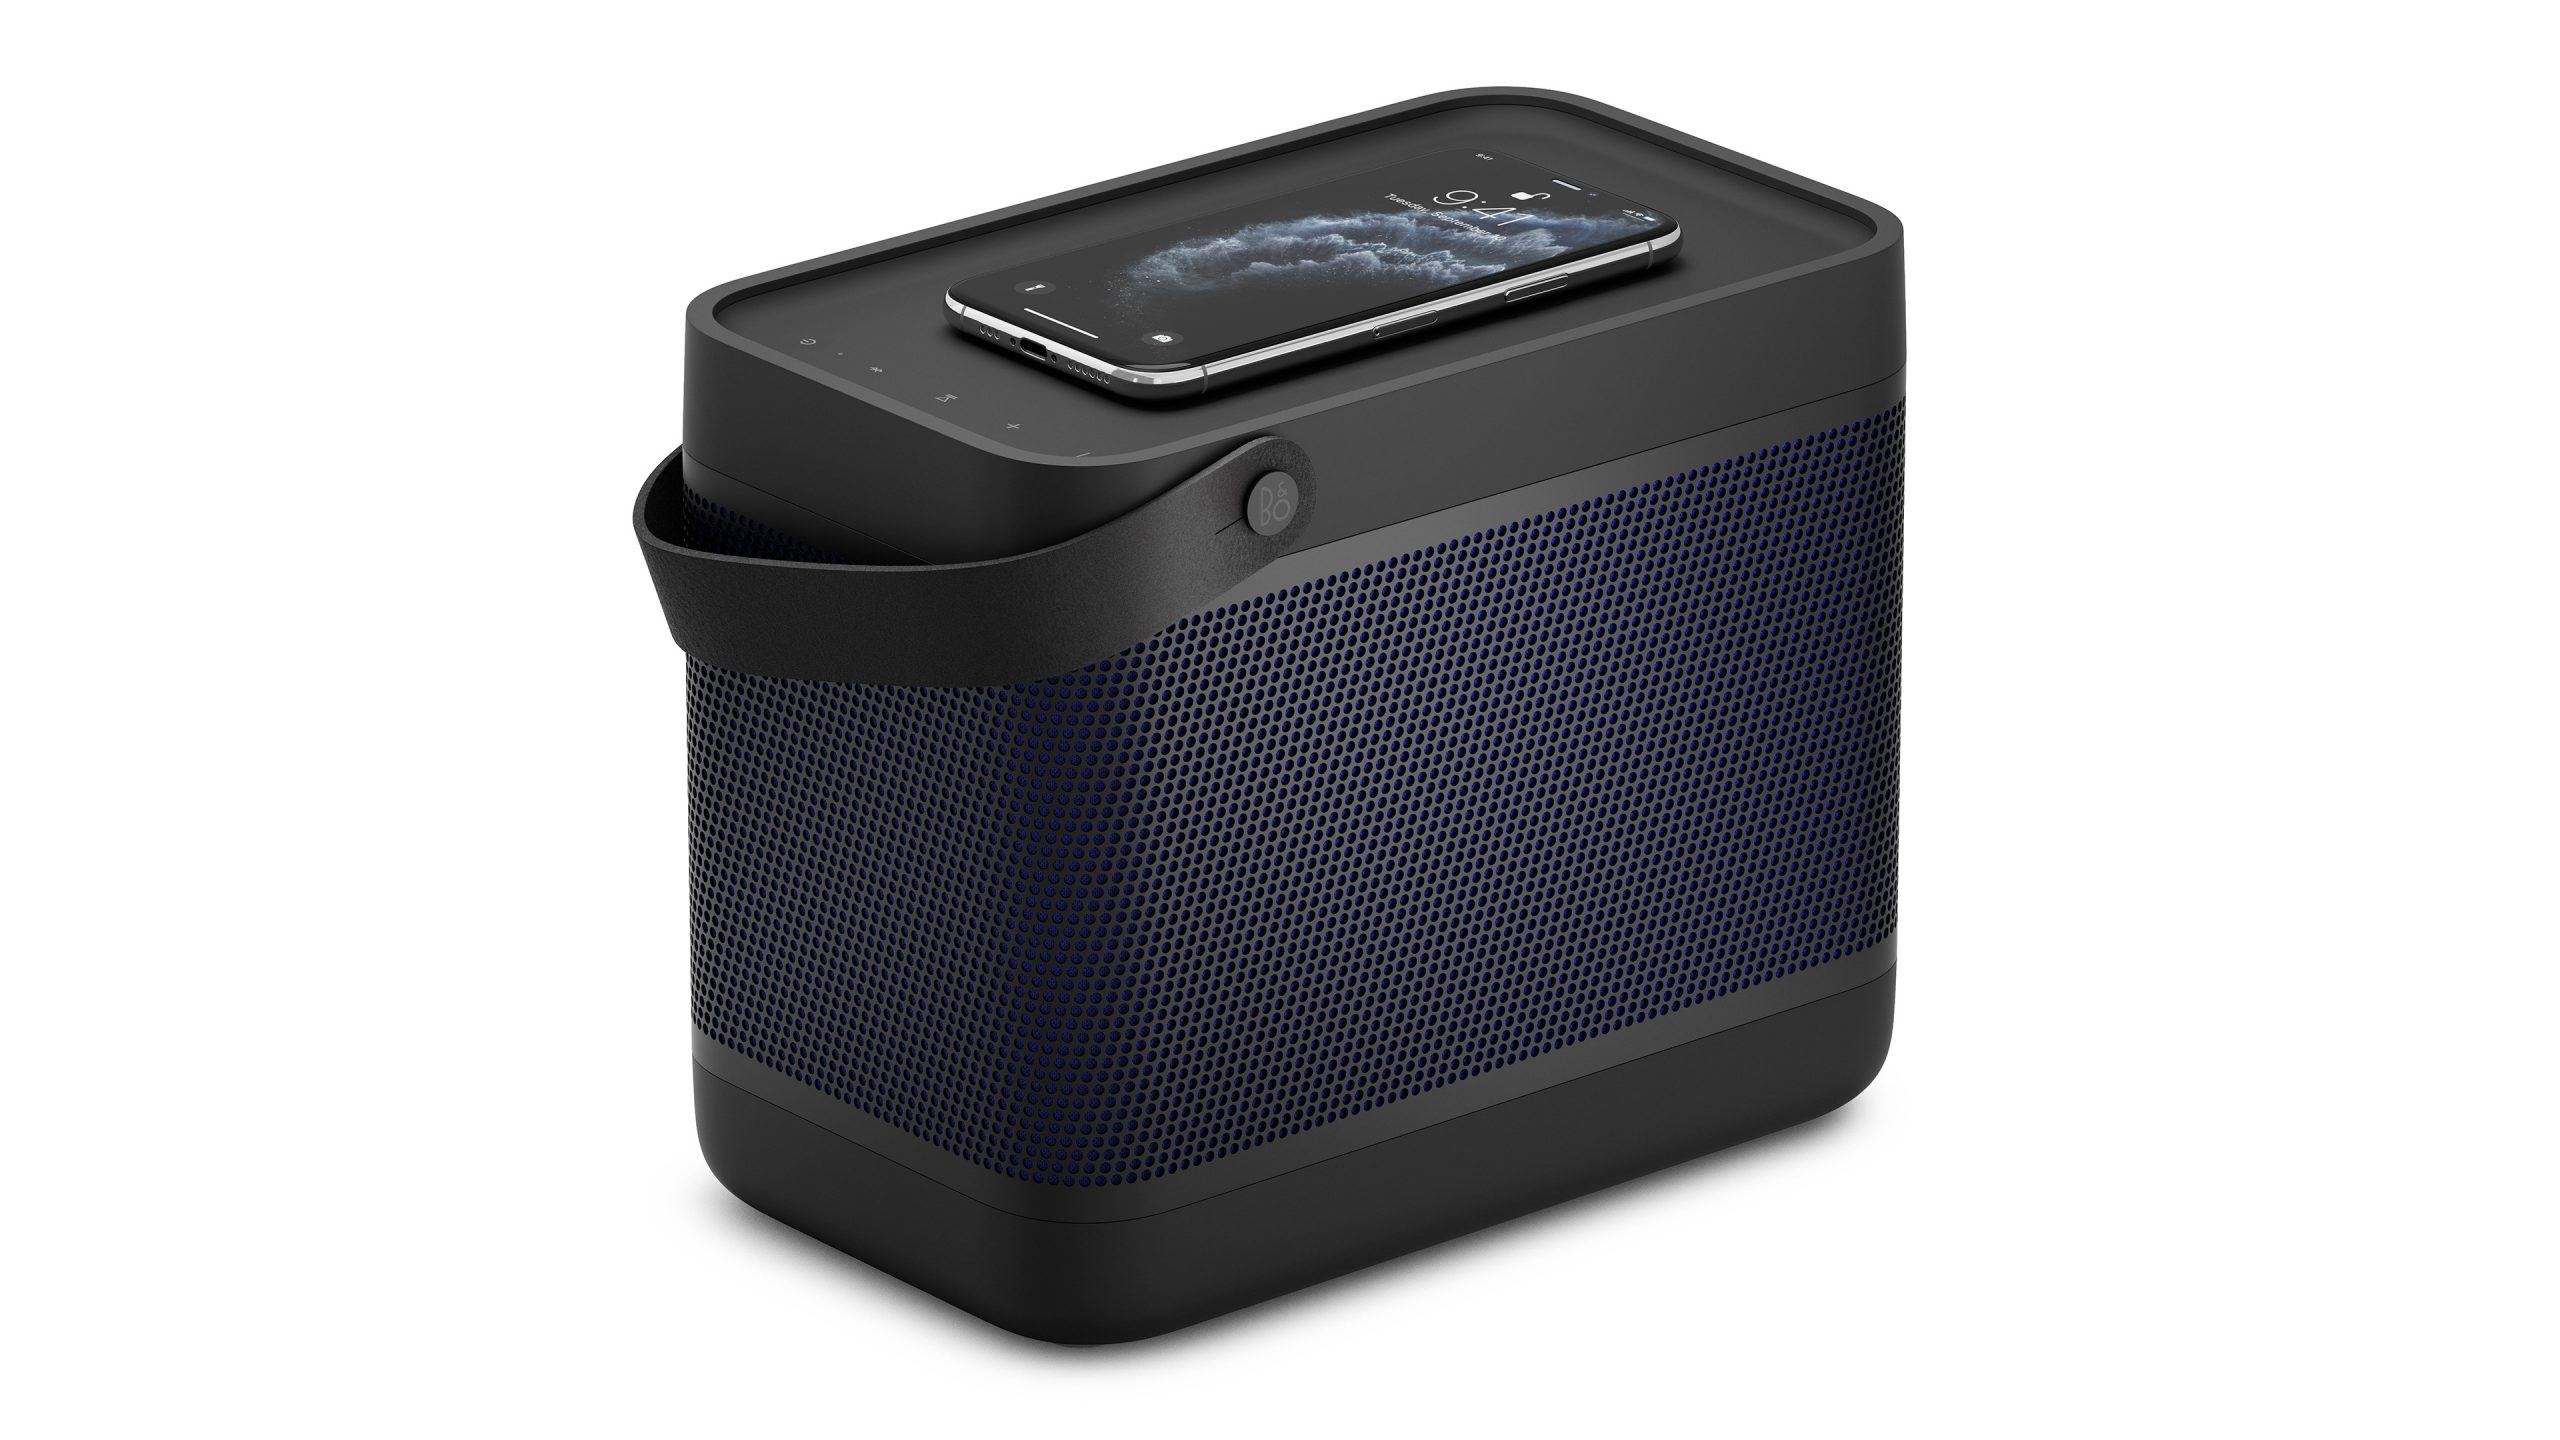 onszelf Overtollig voetstappen B&O Beolit 20 Bluetooth Speaker Has Wireless Charging